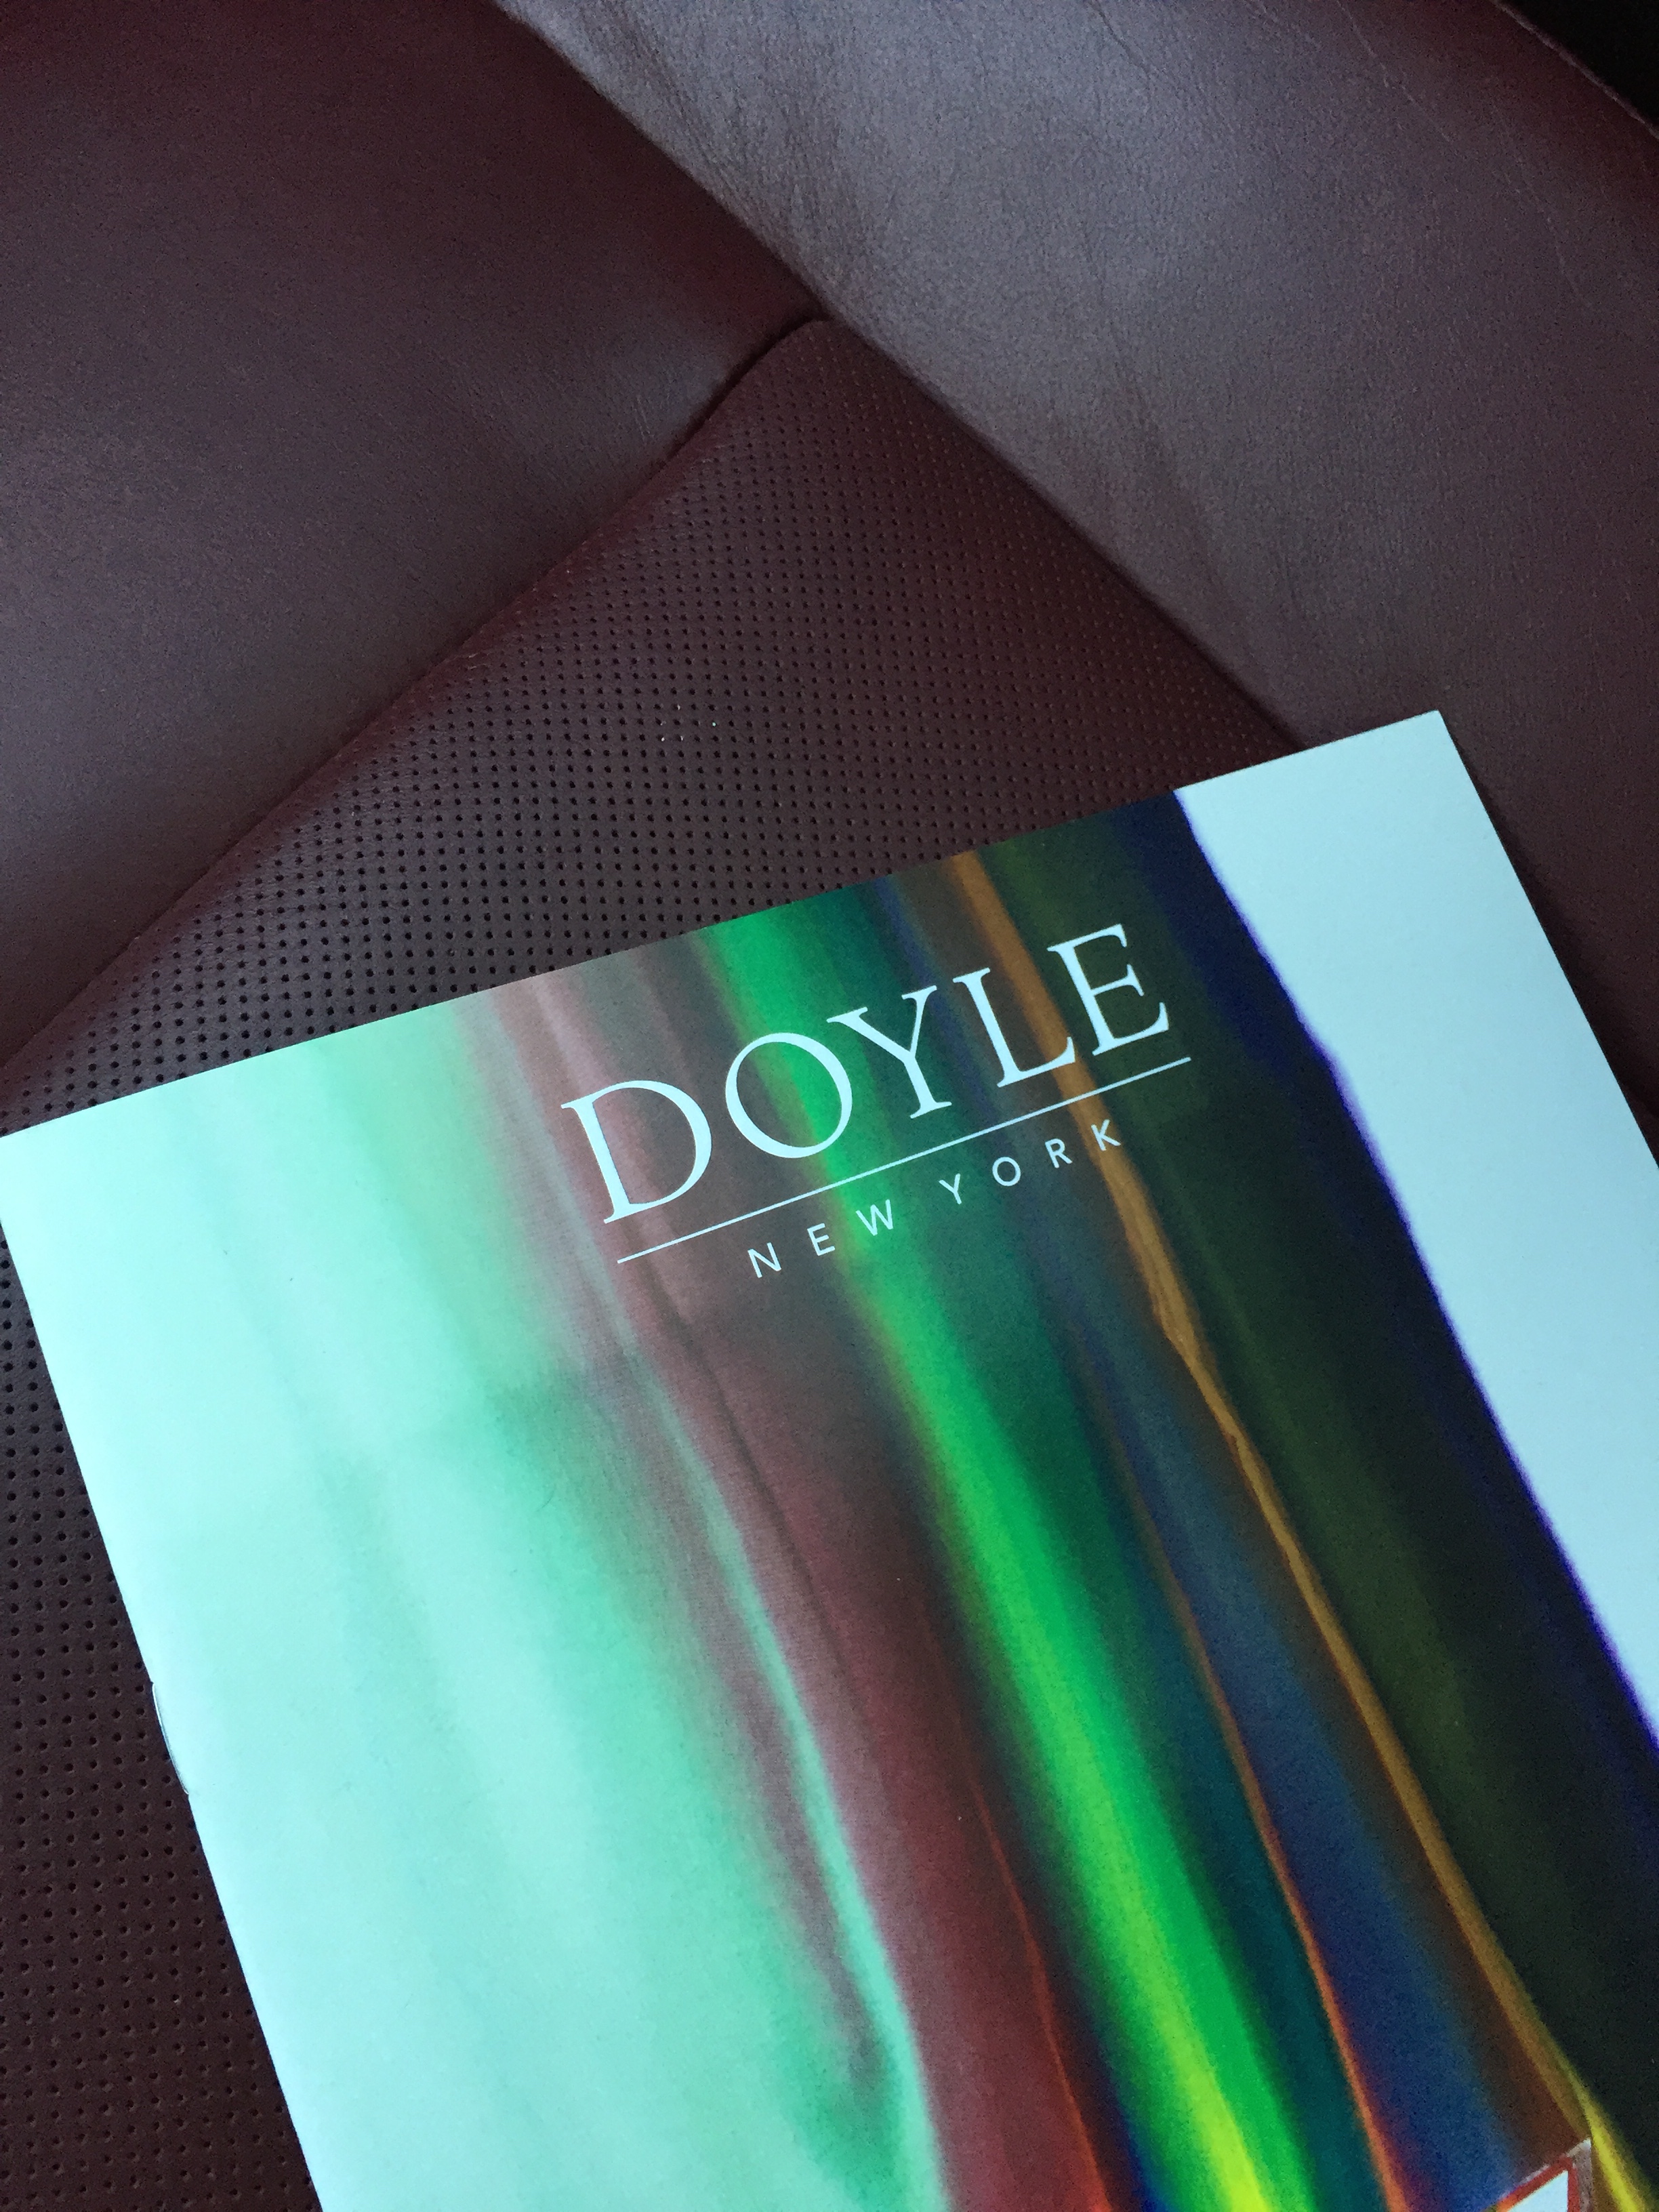 Doyle book